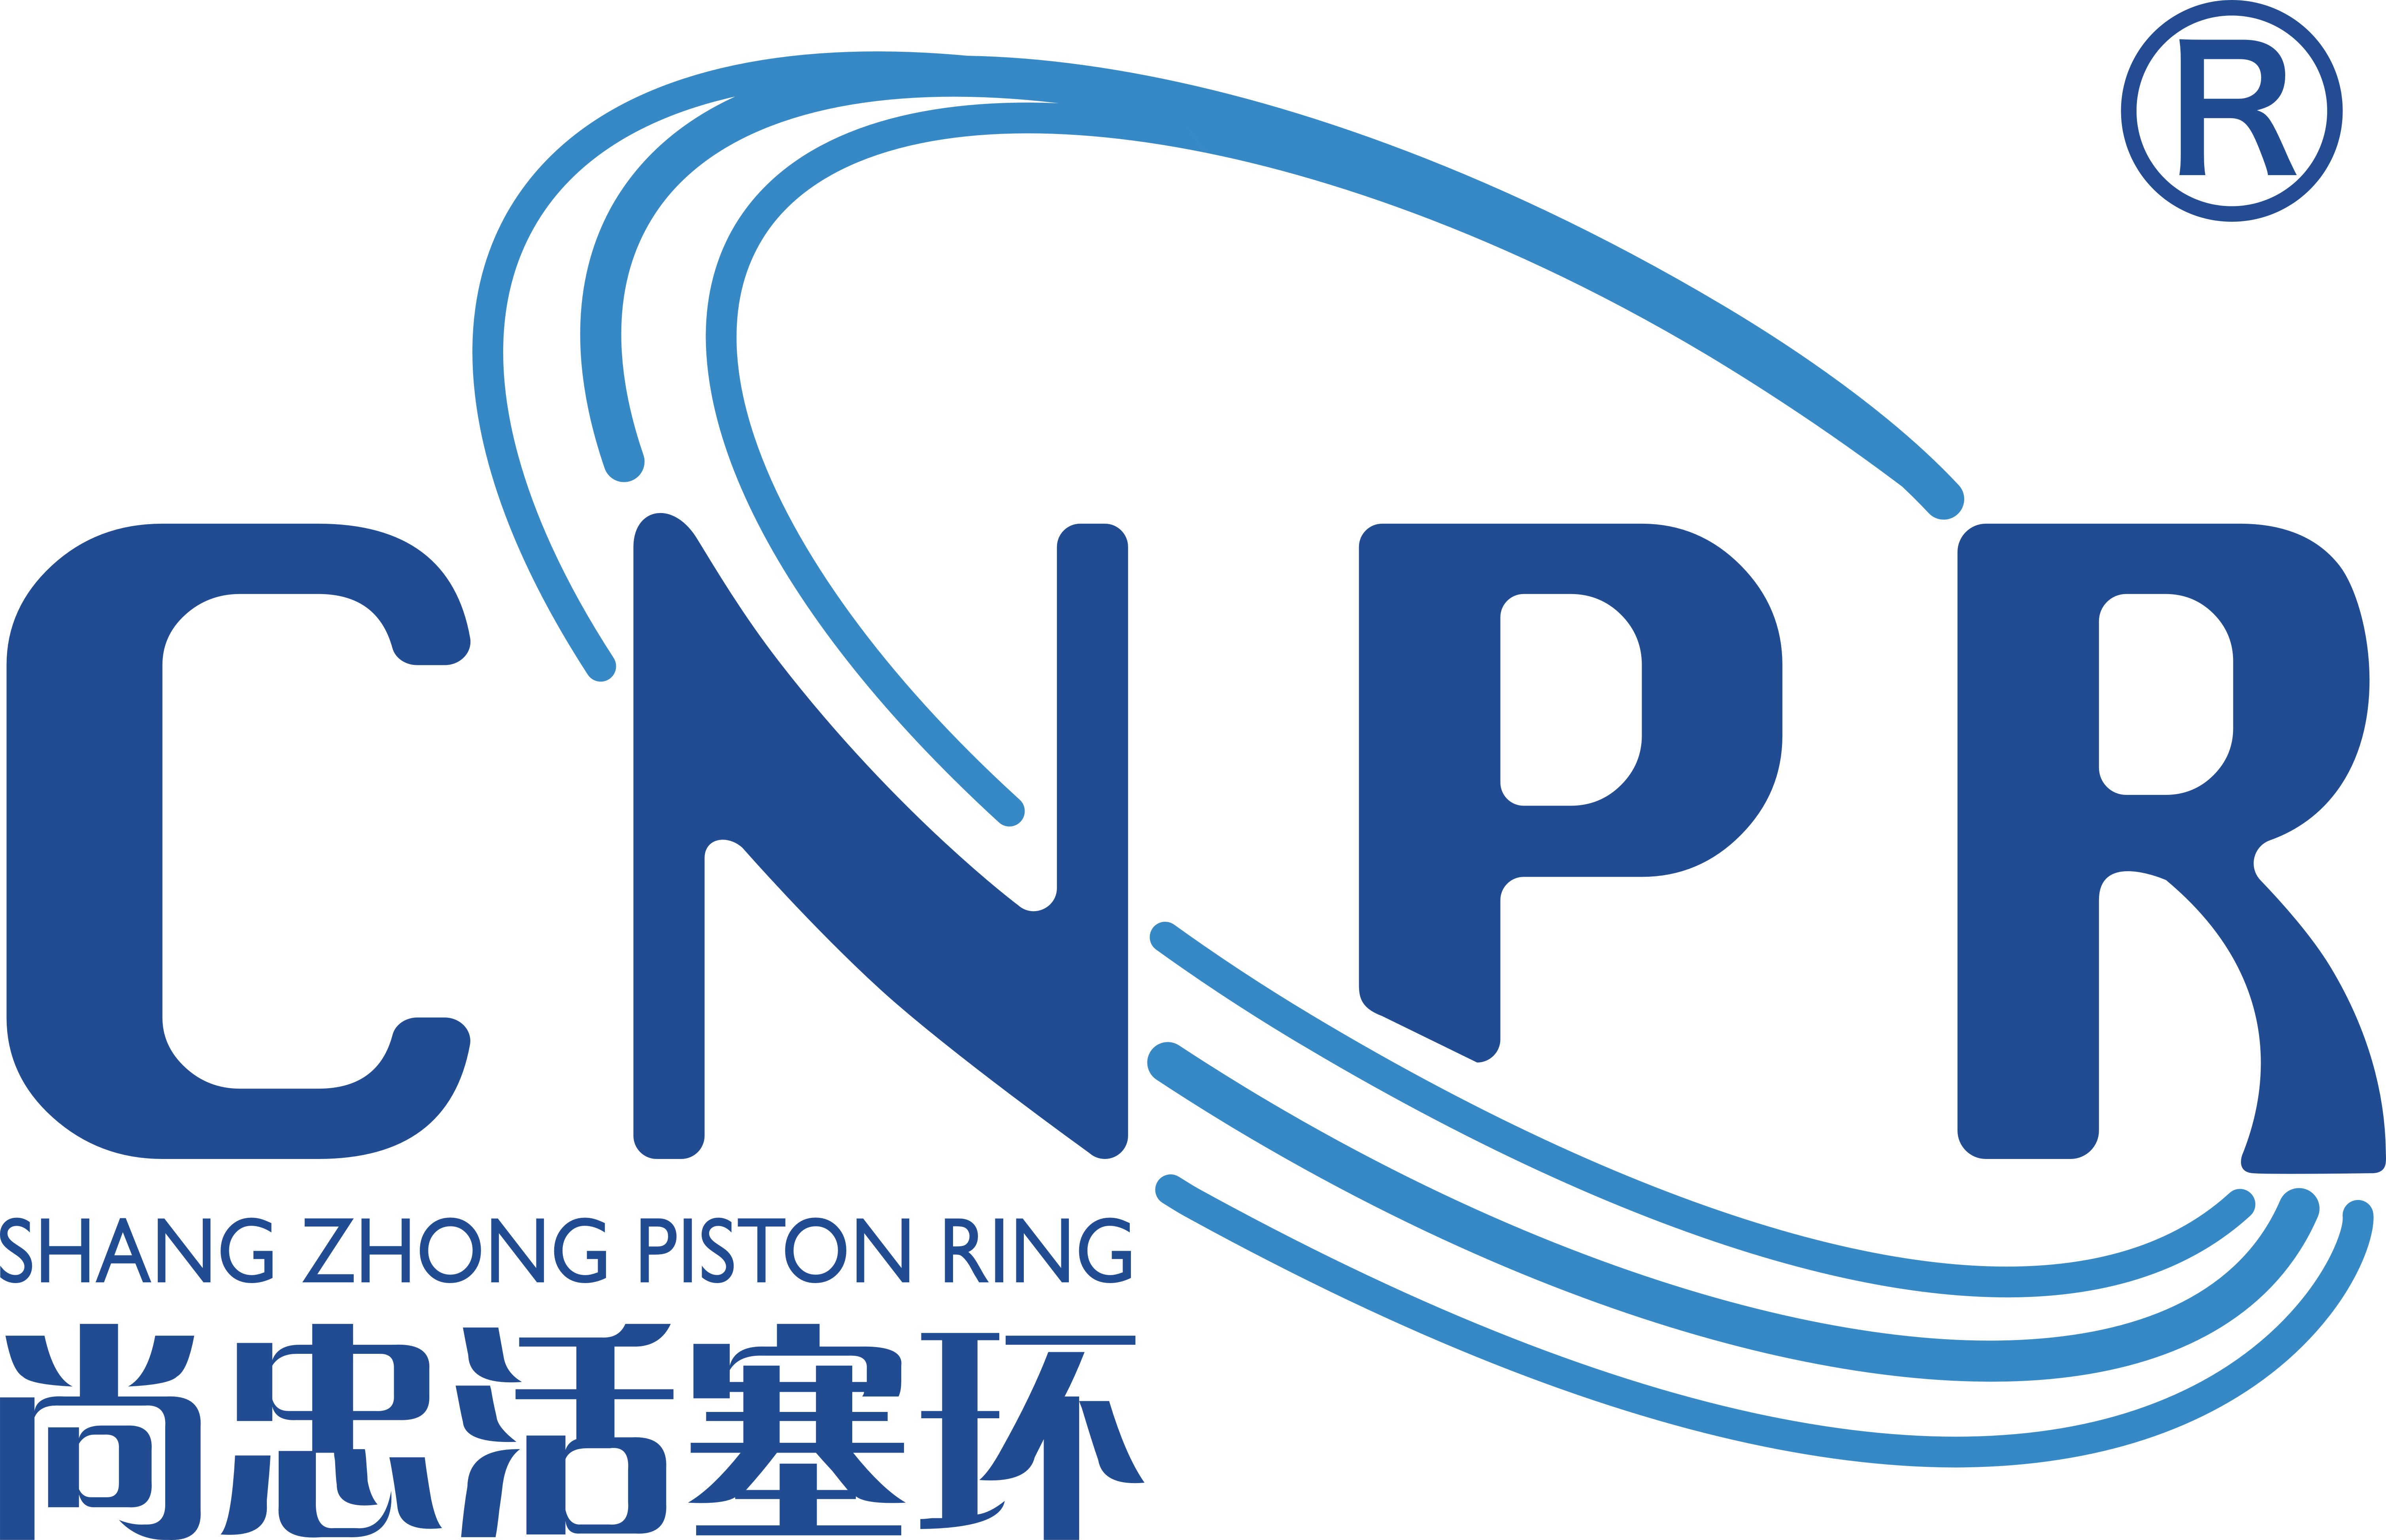 ANHUI SHANGZHONG PISTON RING CO., LTD